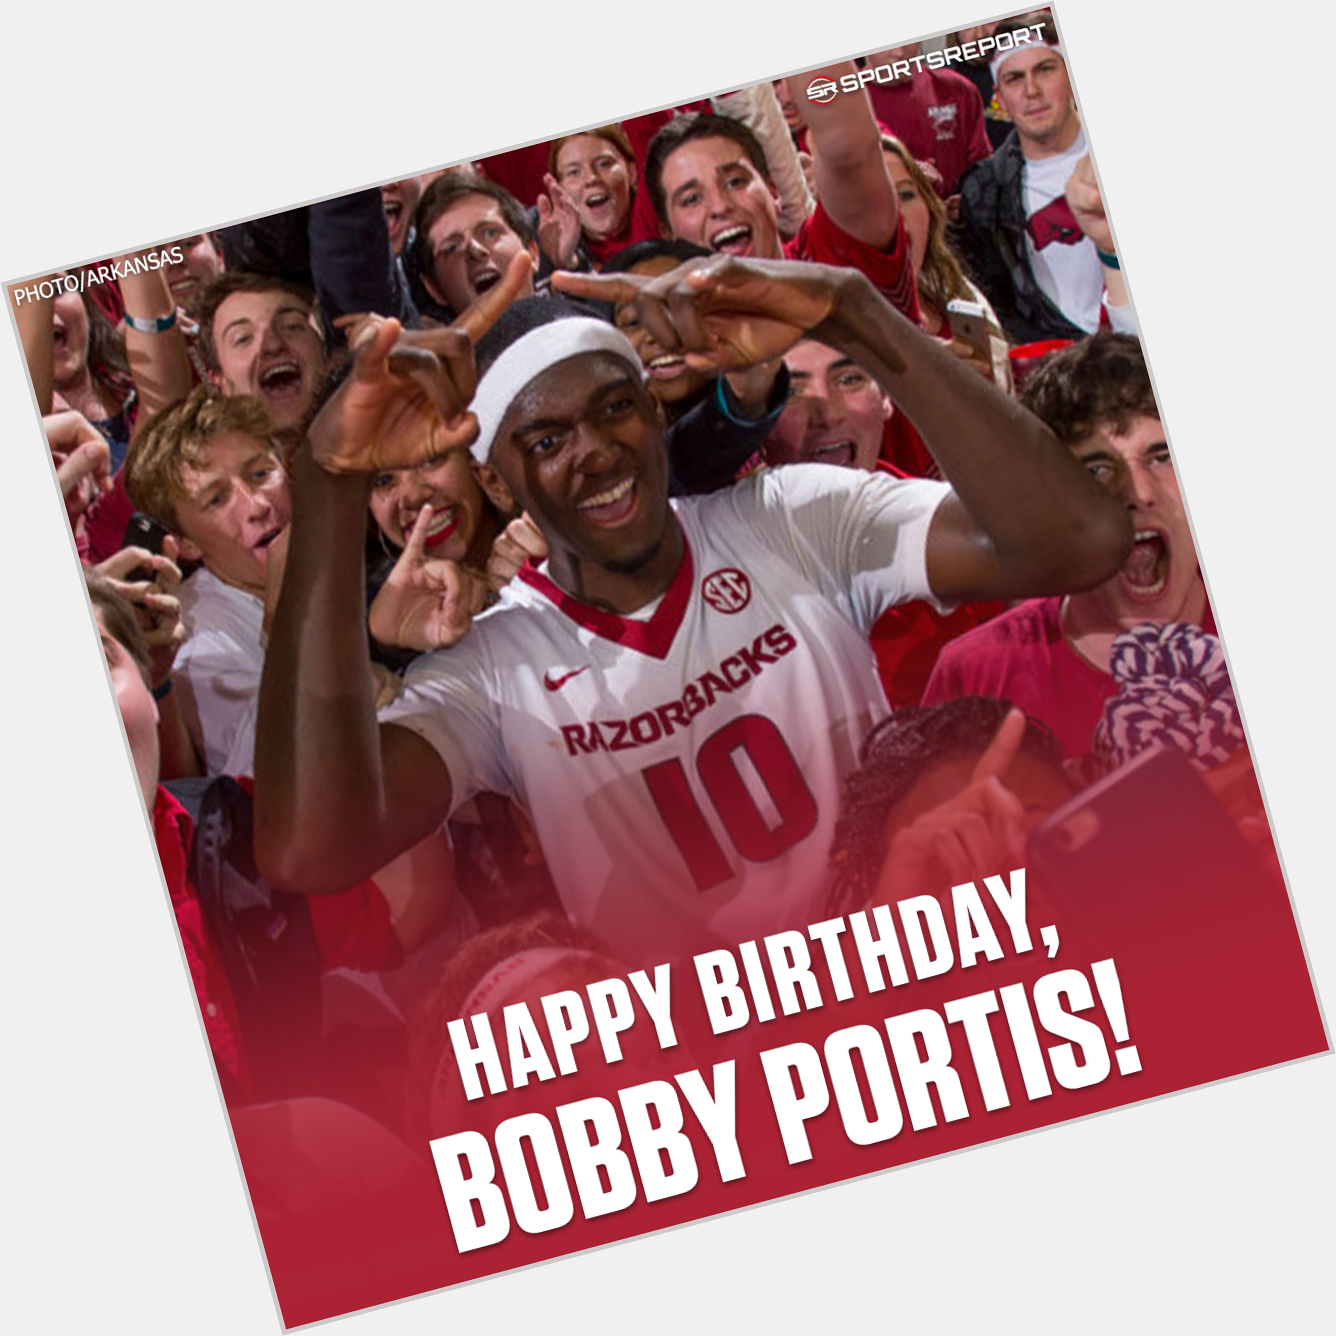 Happy Birthday to great, Bobby Portis!  